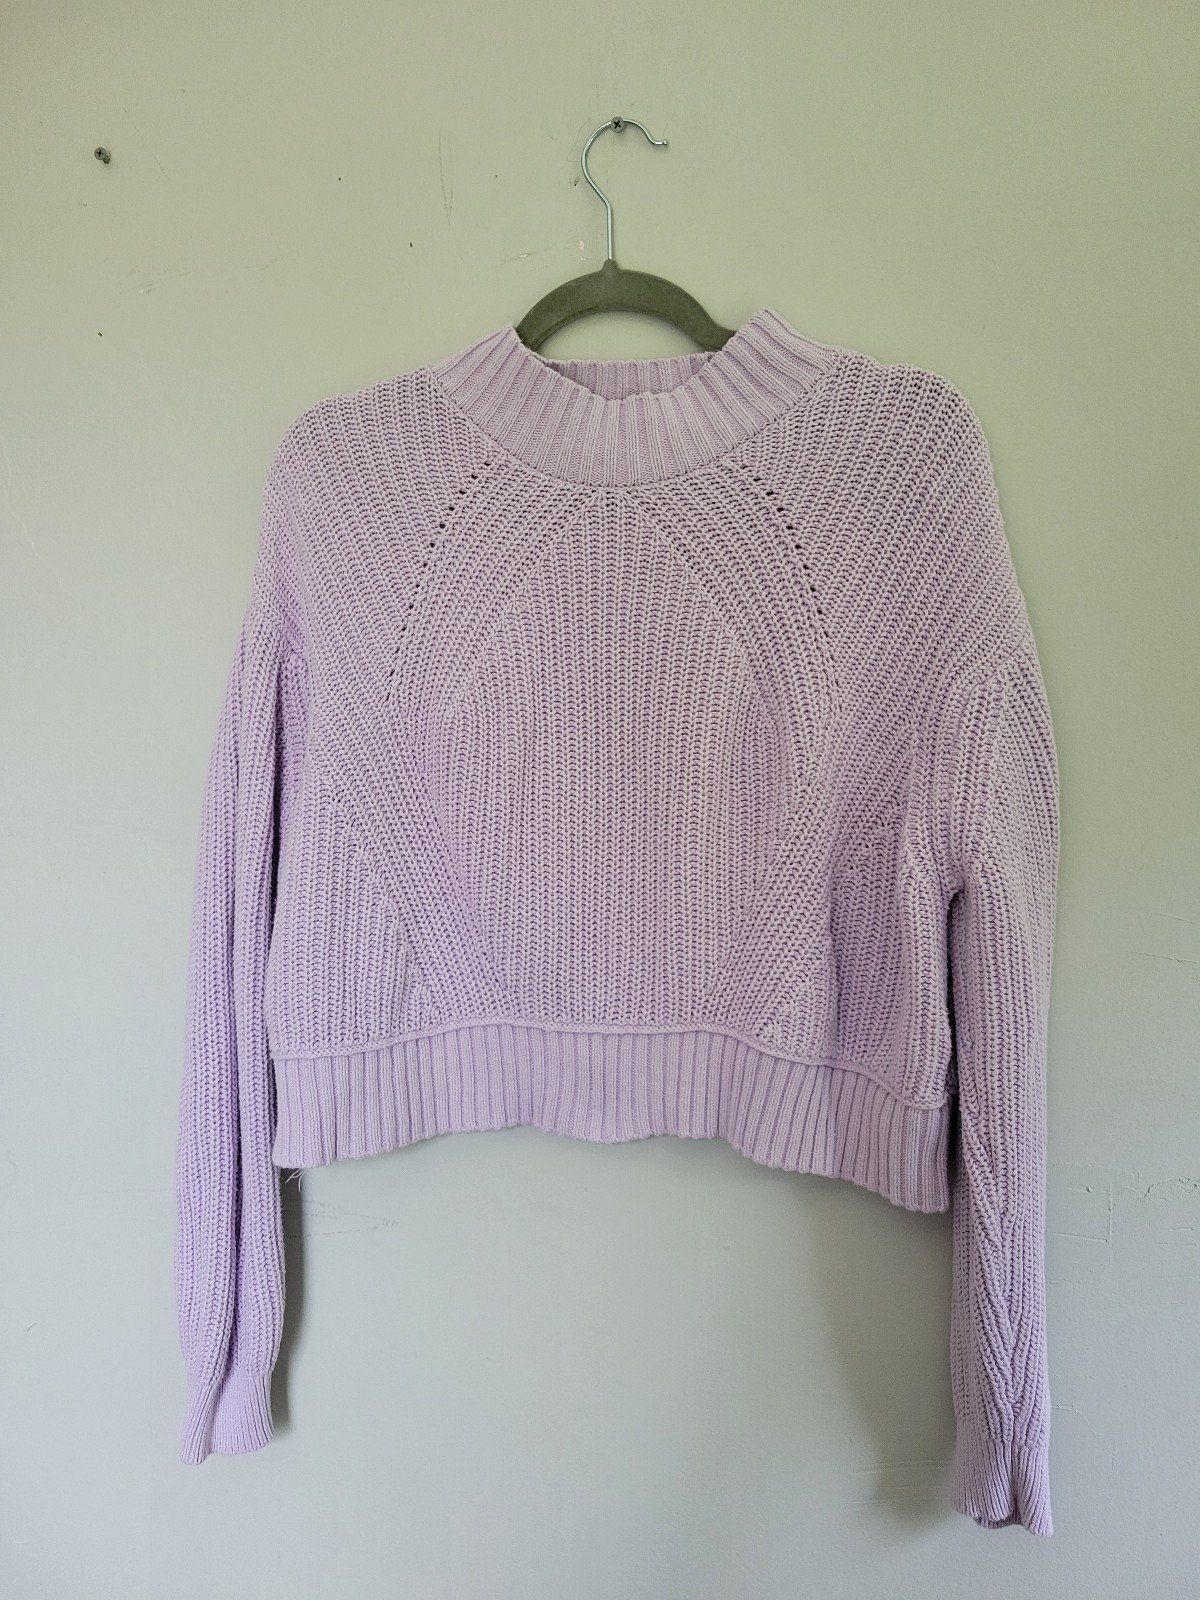 reasonable price Aeropostale Cropped Lavender Sweater J